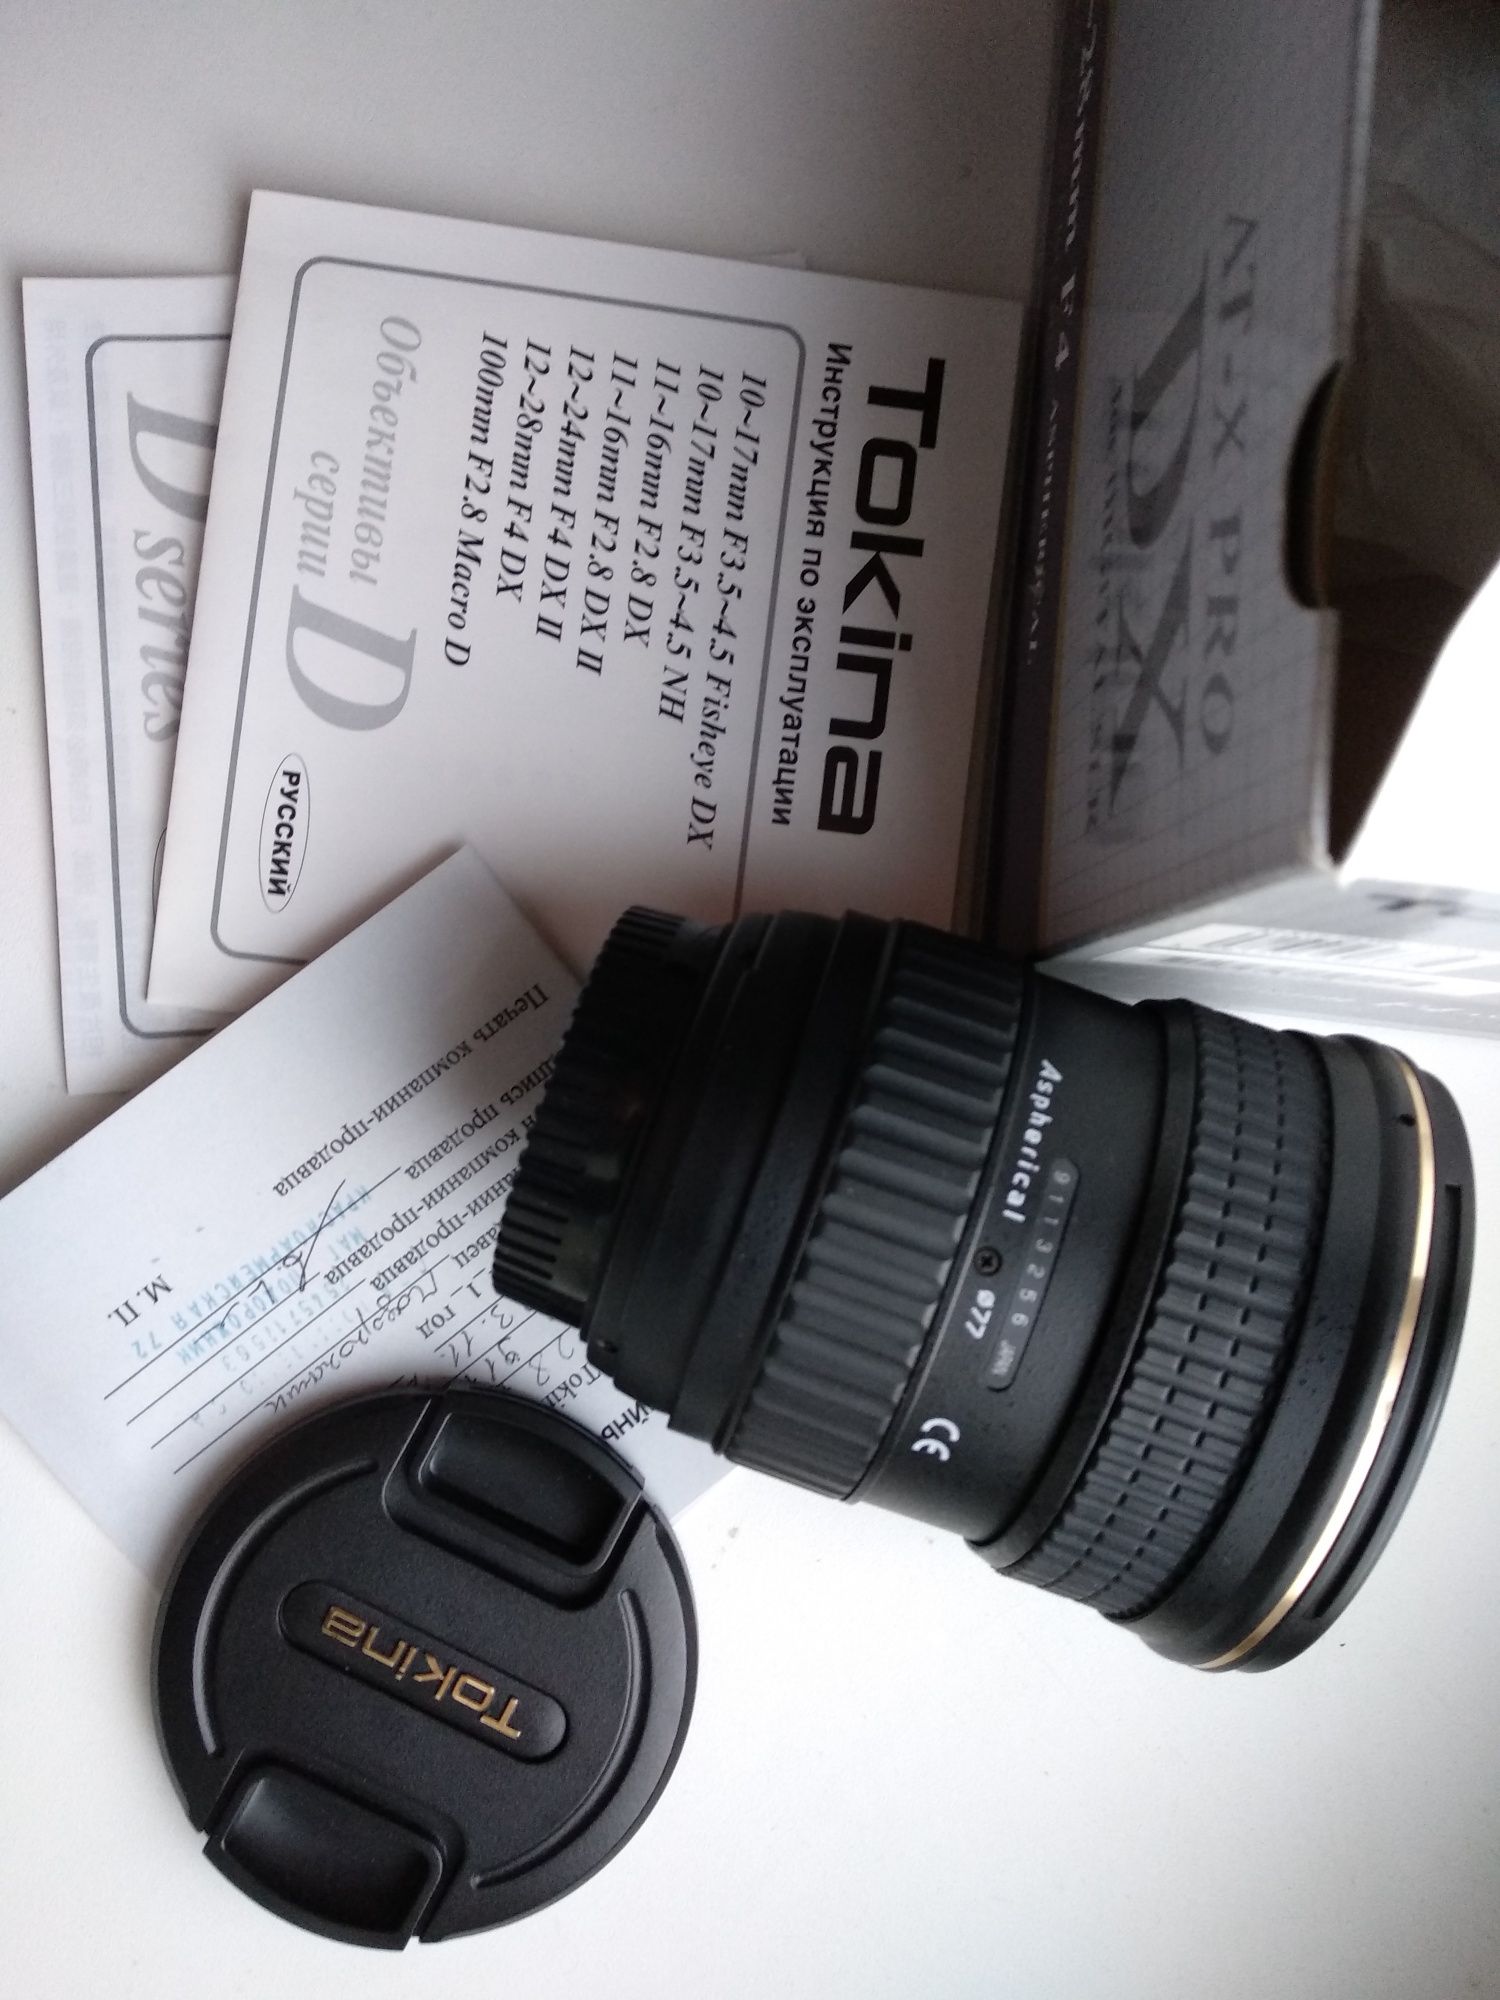 Tokina для Nikon AT-X 12-28 F4 PRO DX (12-28mm)